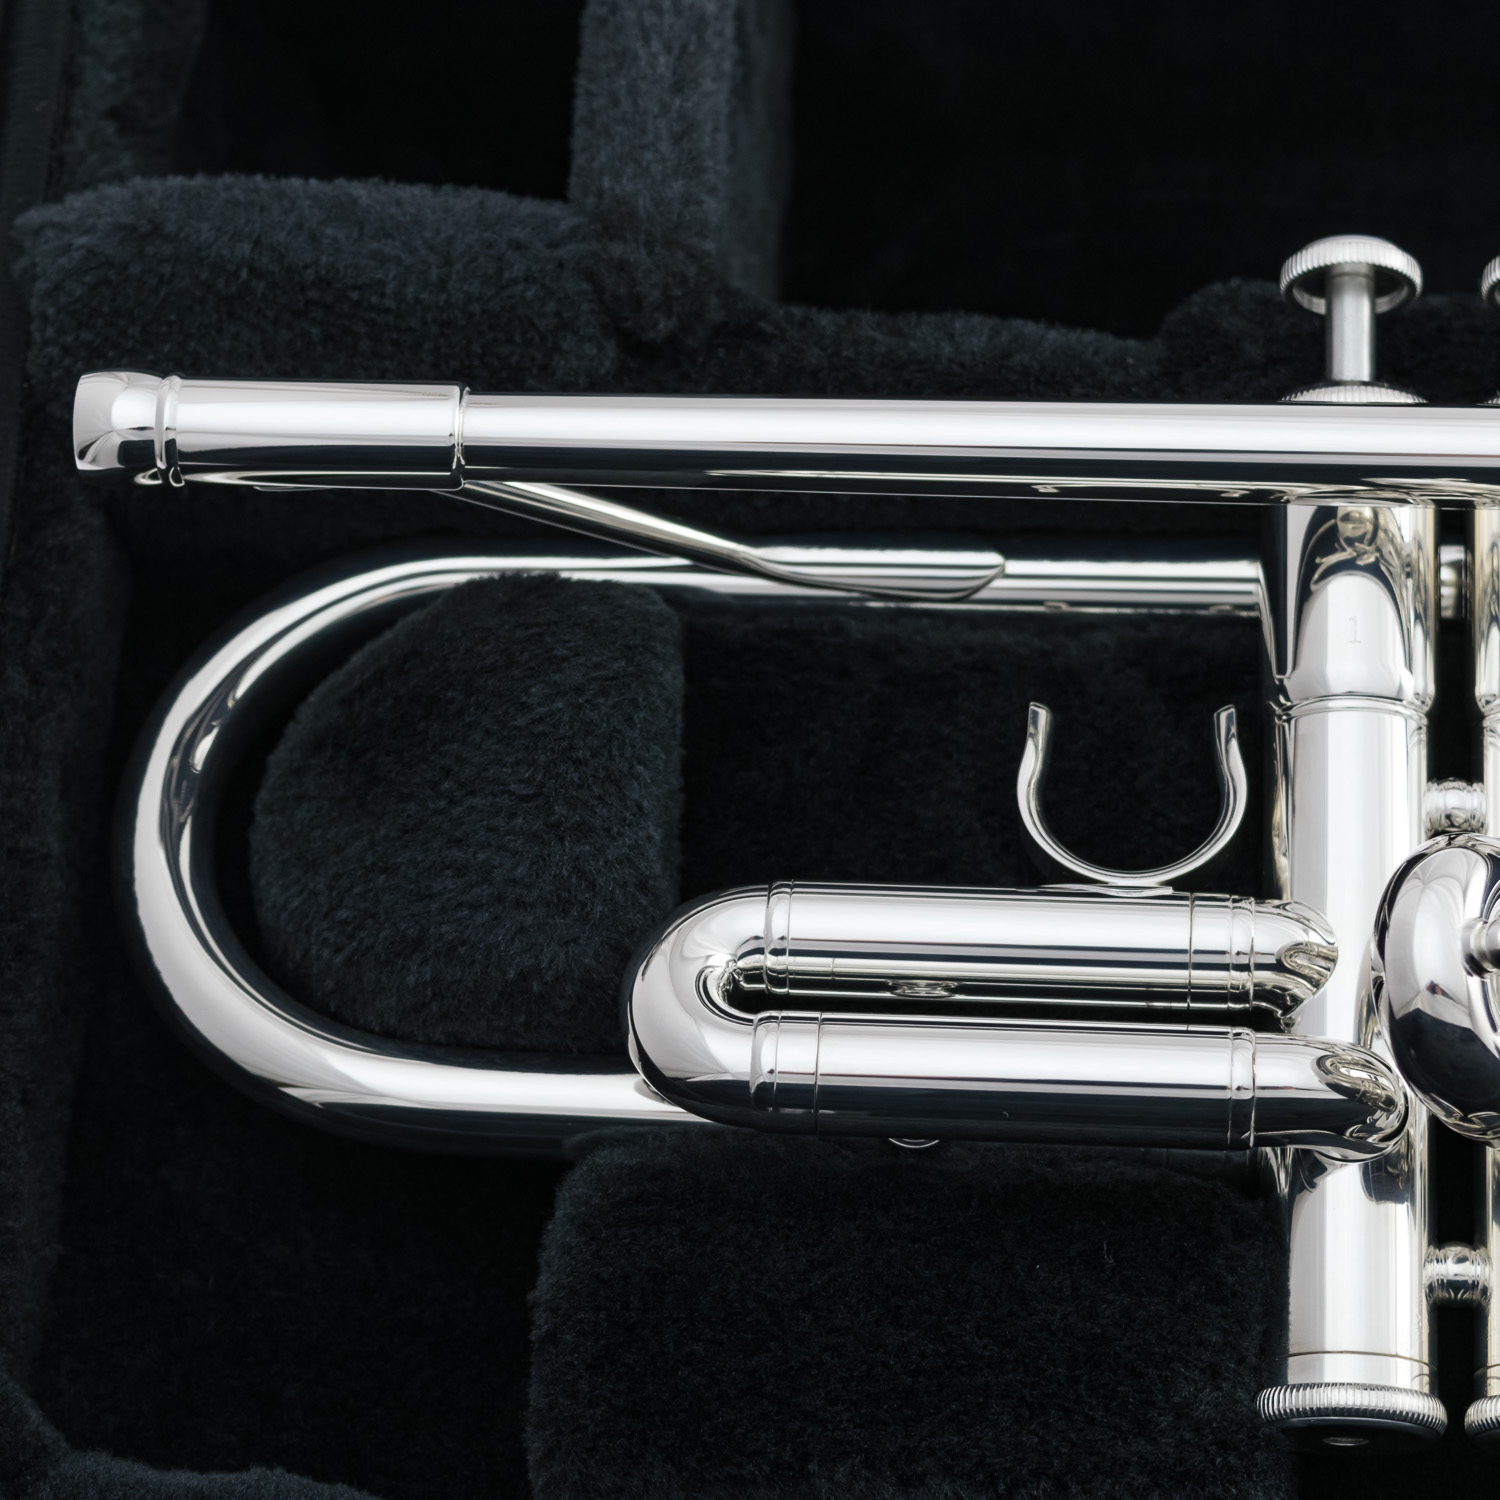 Yamaha Bb Trompete - YTR 4335 GS II